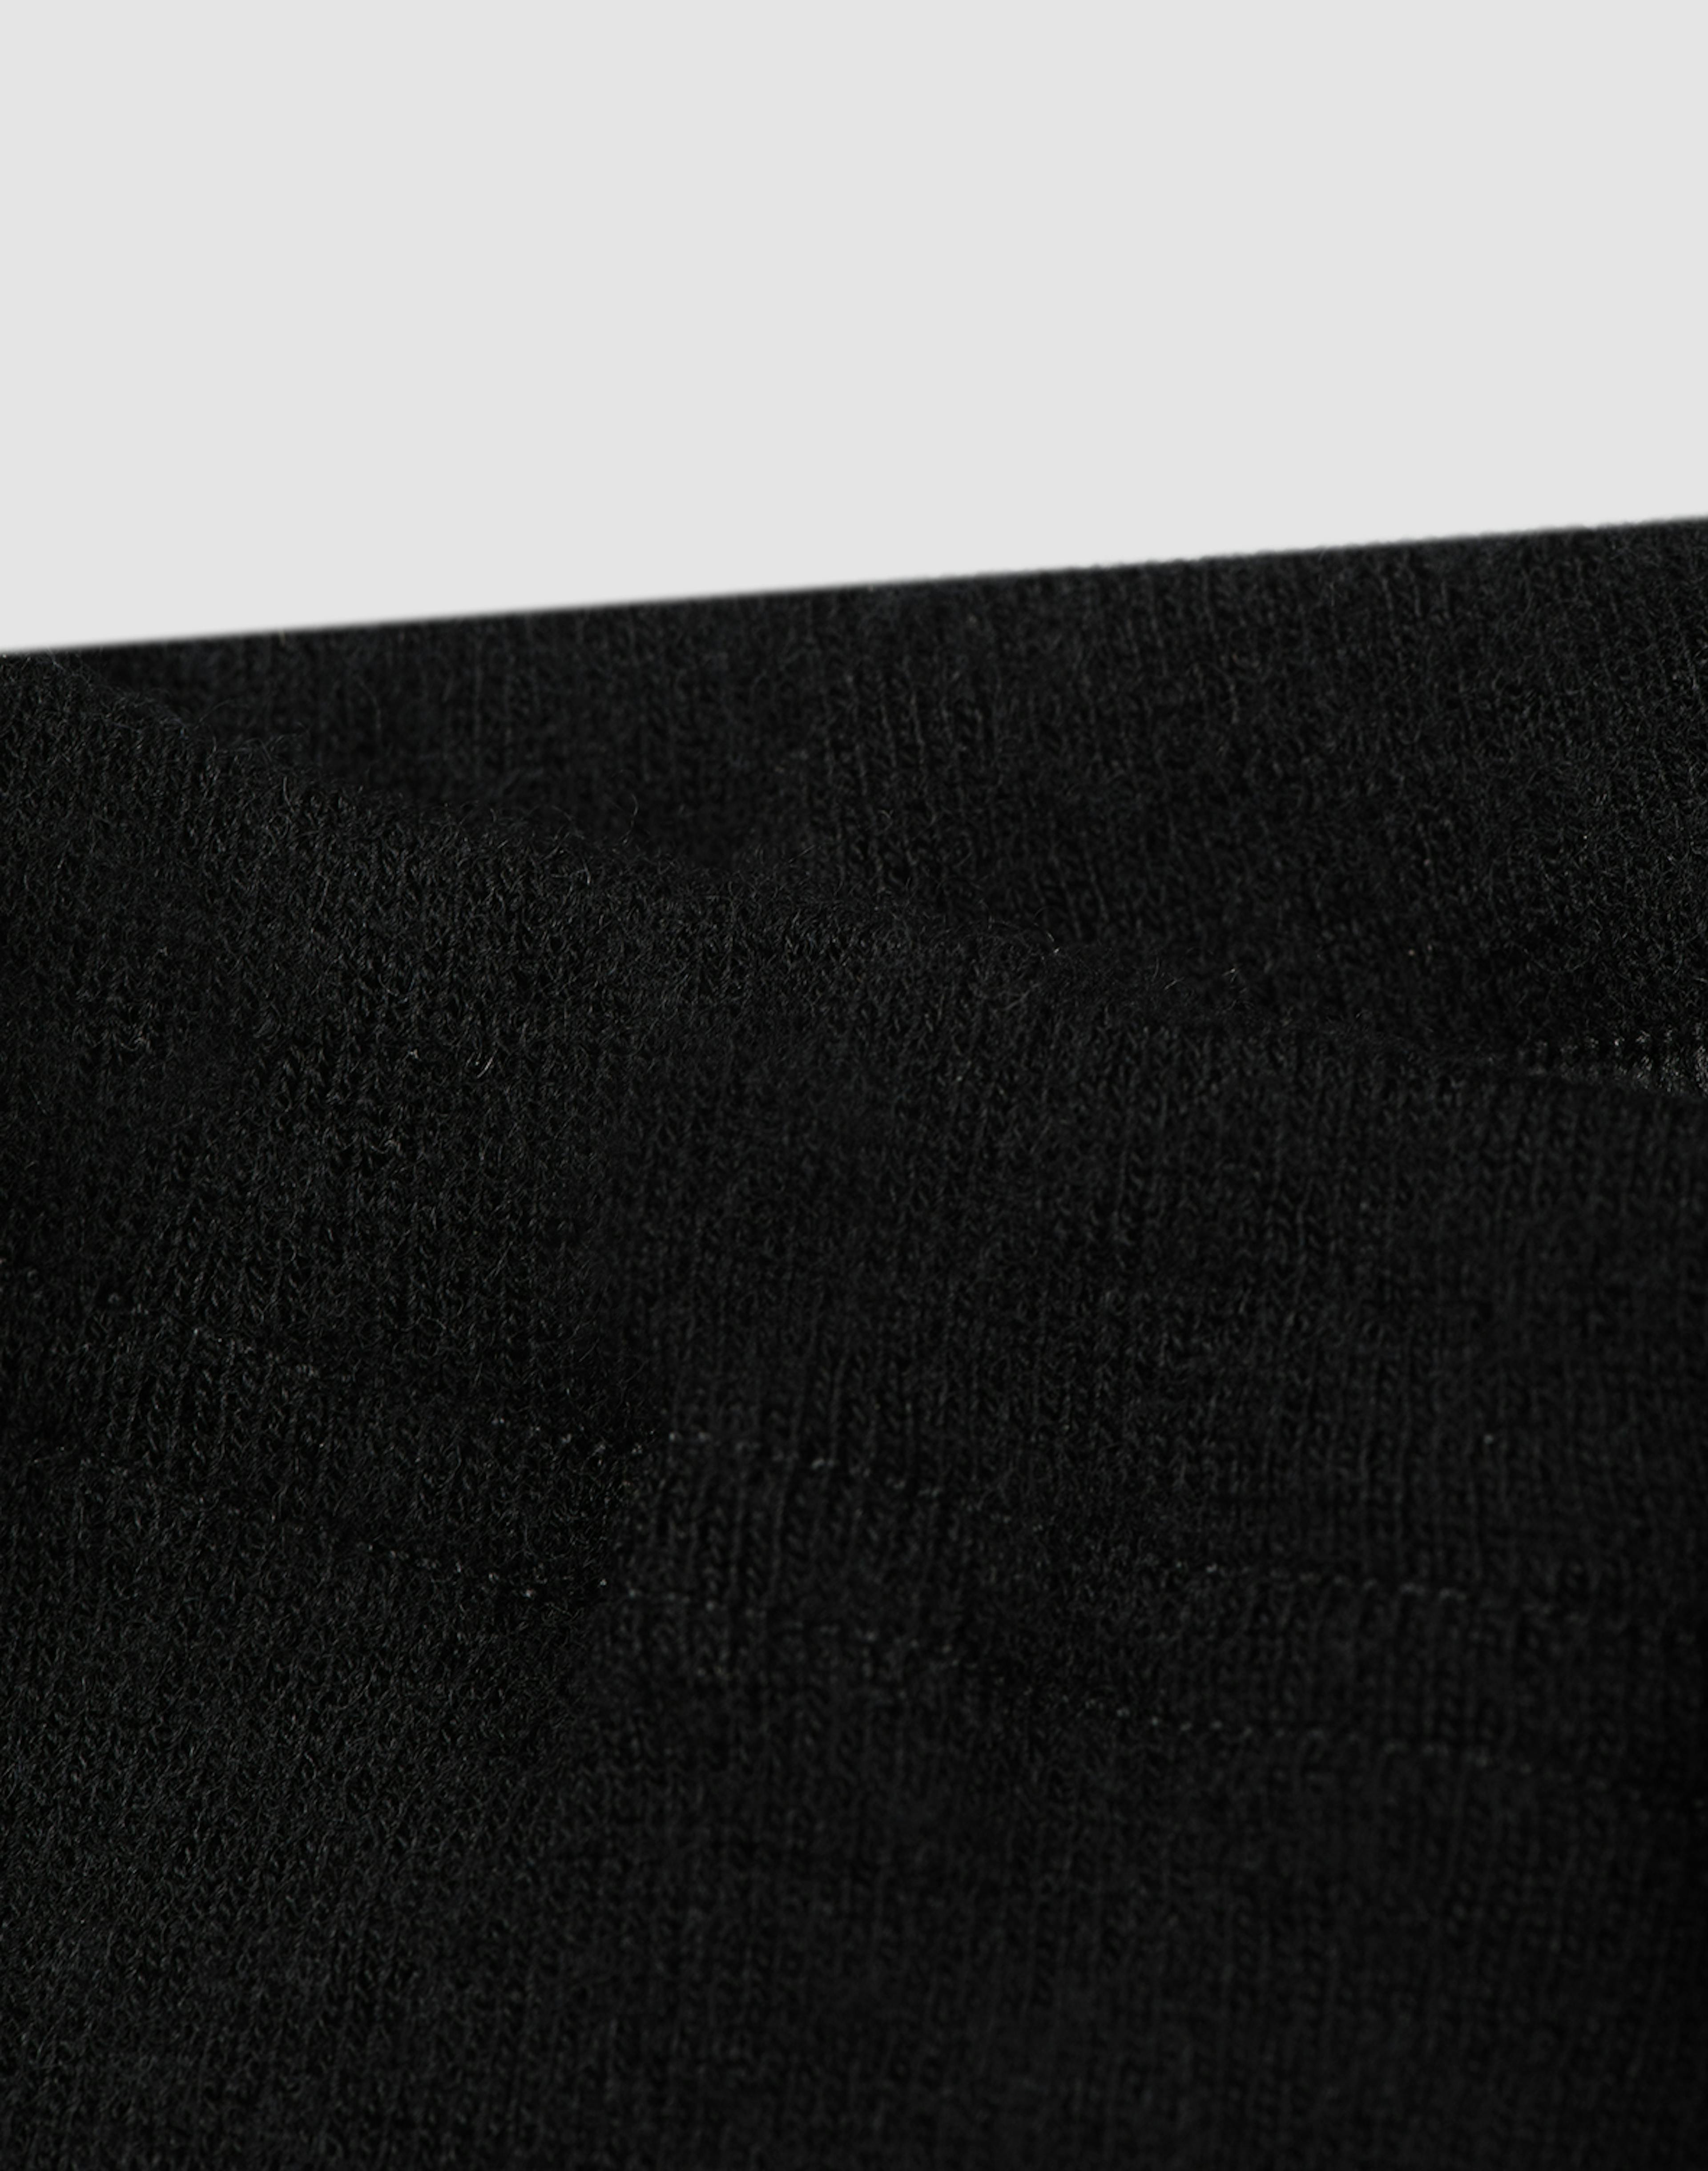 Plus size women's merino wool leggings - Black - Dilling